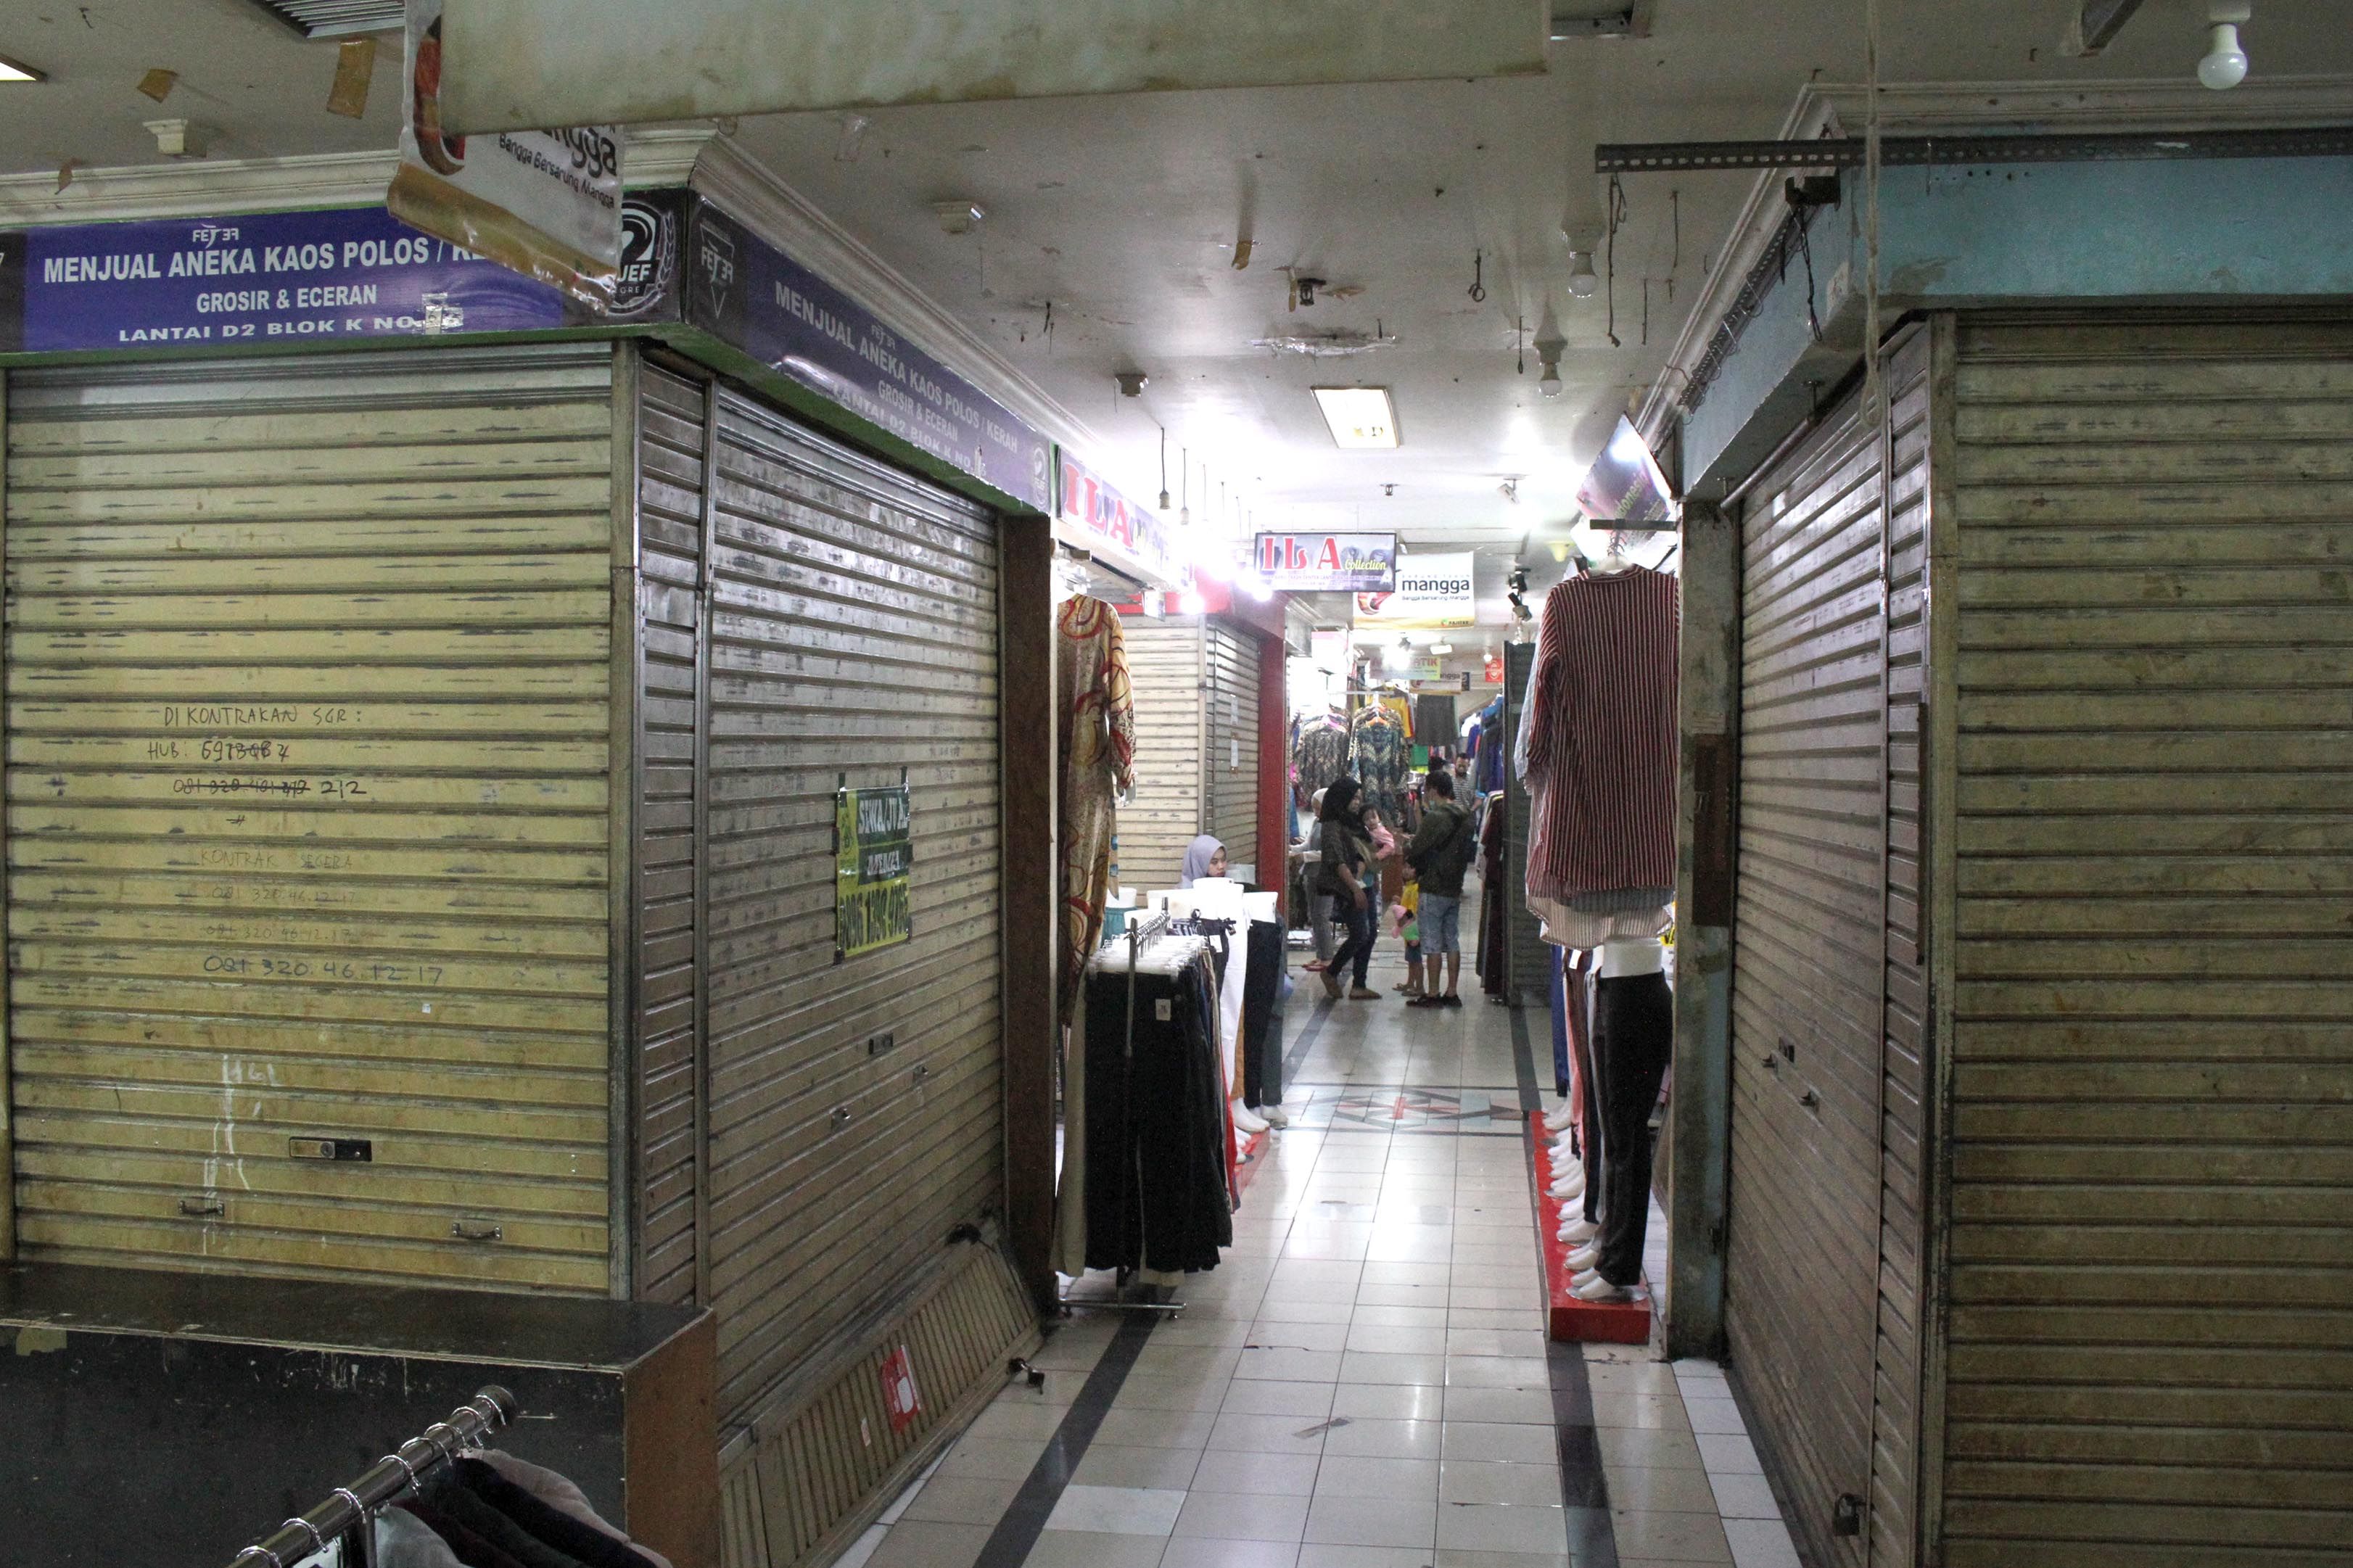 Sejumlah kios pedagang di Pasar Baru, Kota Bandung banyak yang tutup di karenakan kurangnya daya beli masyarakat di masa pandemi Covid-19 serta pengelolaan pasar yang kurang baik, Senin 9 November 2020. (Darma Legi/Galamedia)